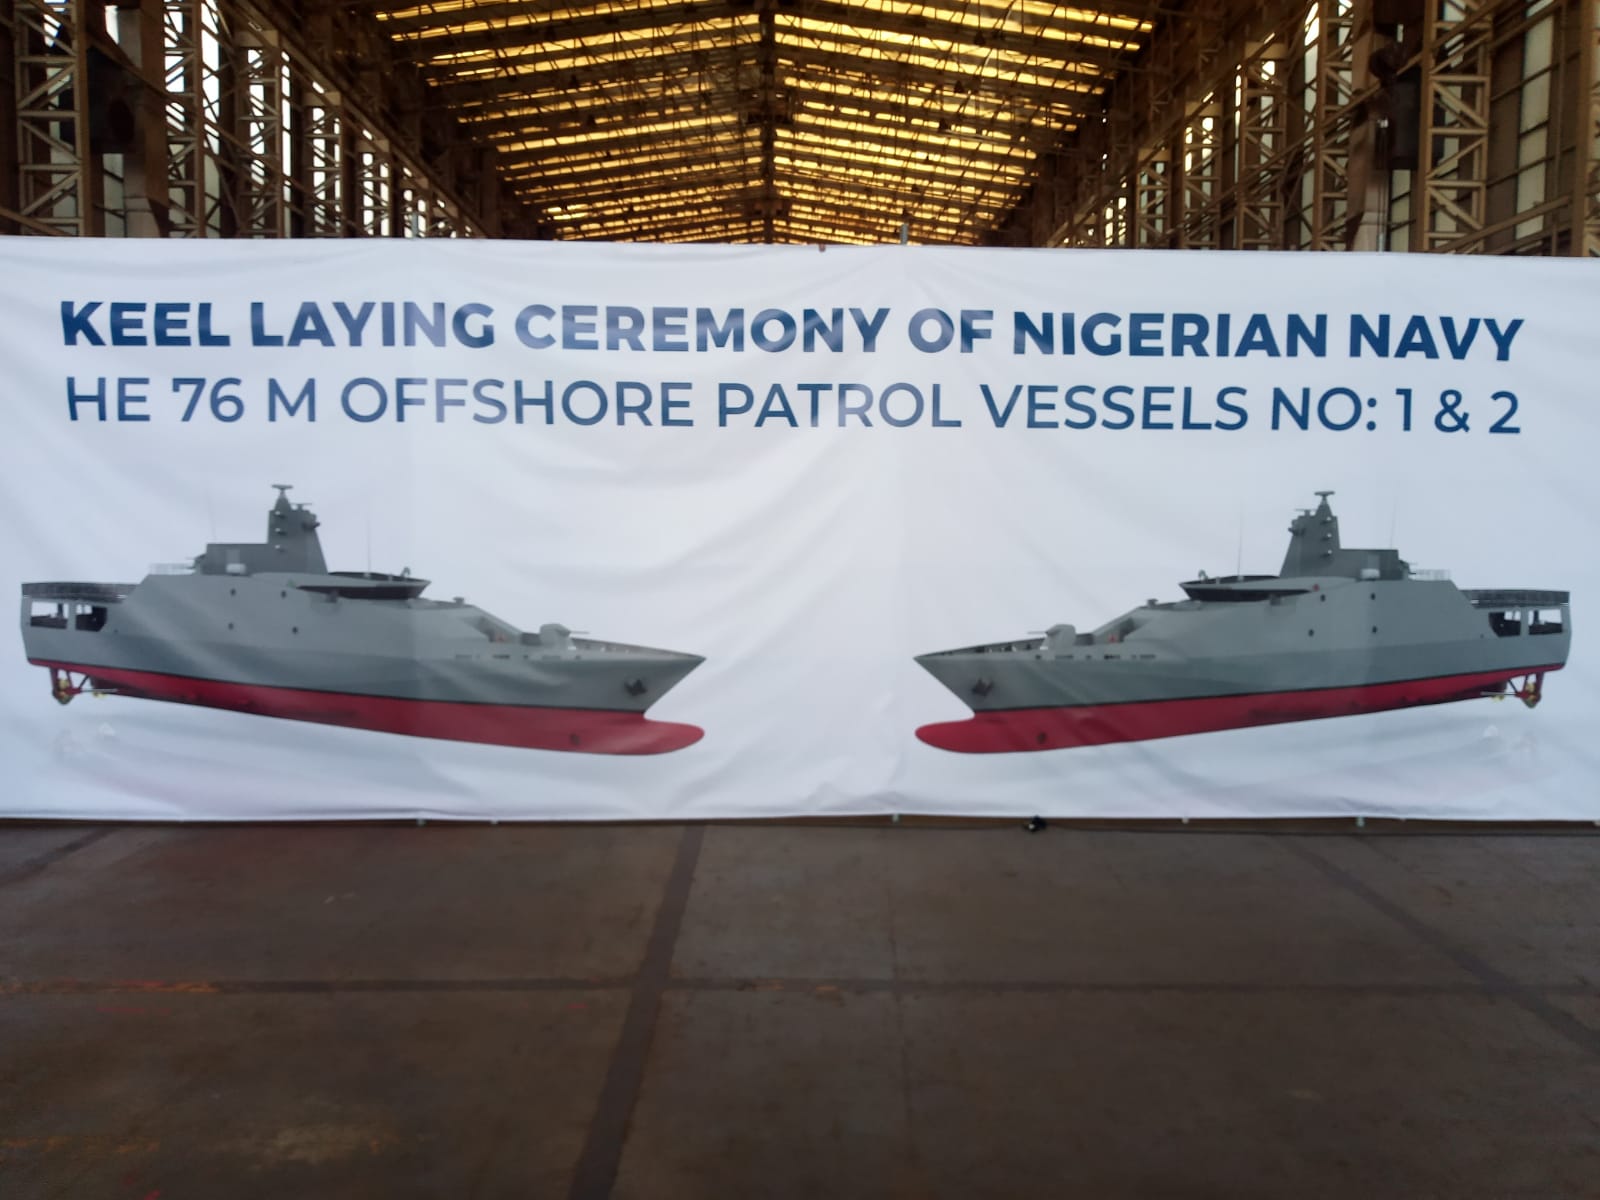 DEARSAN Begins Construction of 76-meter Offshore Patrol Vessels for the Nigerian Navy